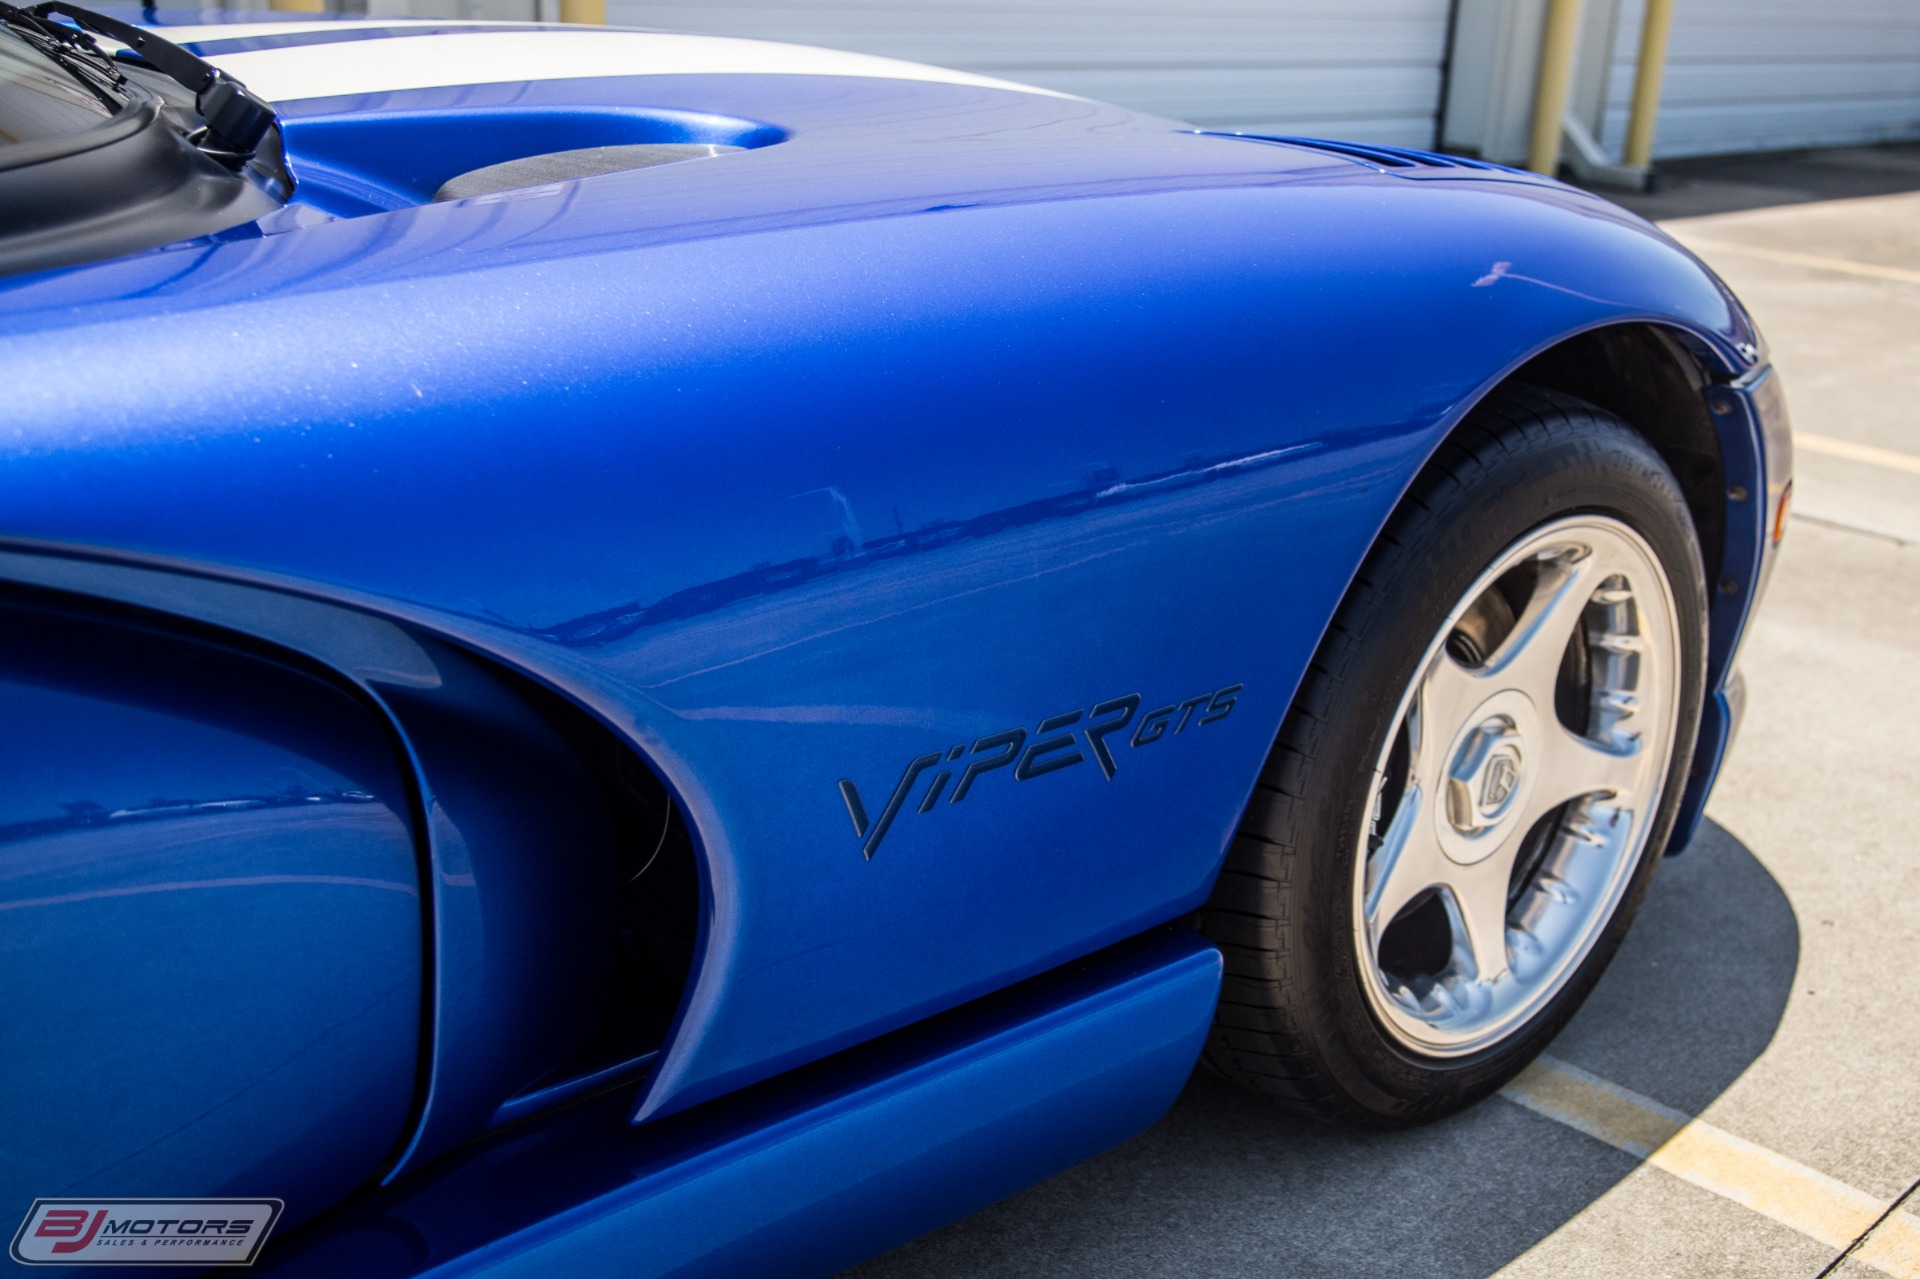 Used-1996-Dodge-Viper-GTS-Blue-and-White-Stripes